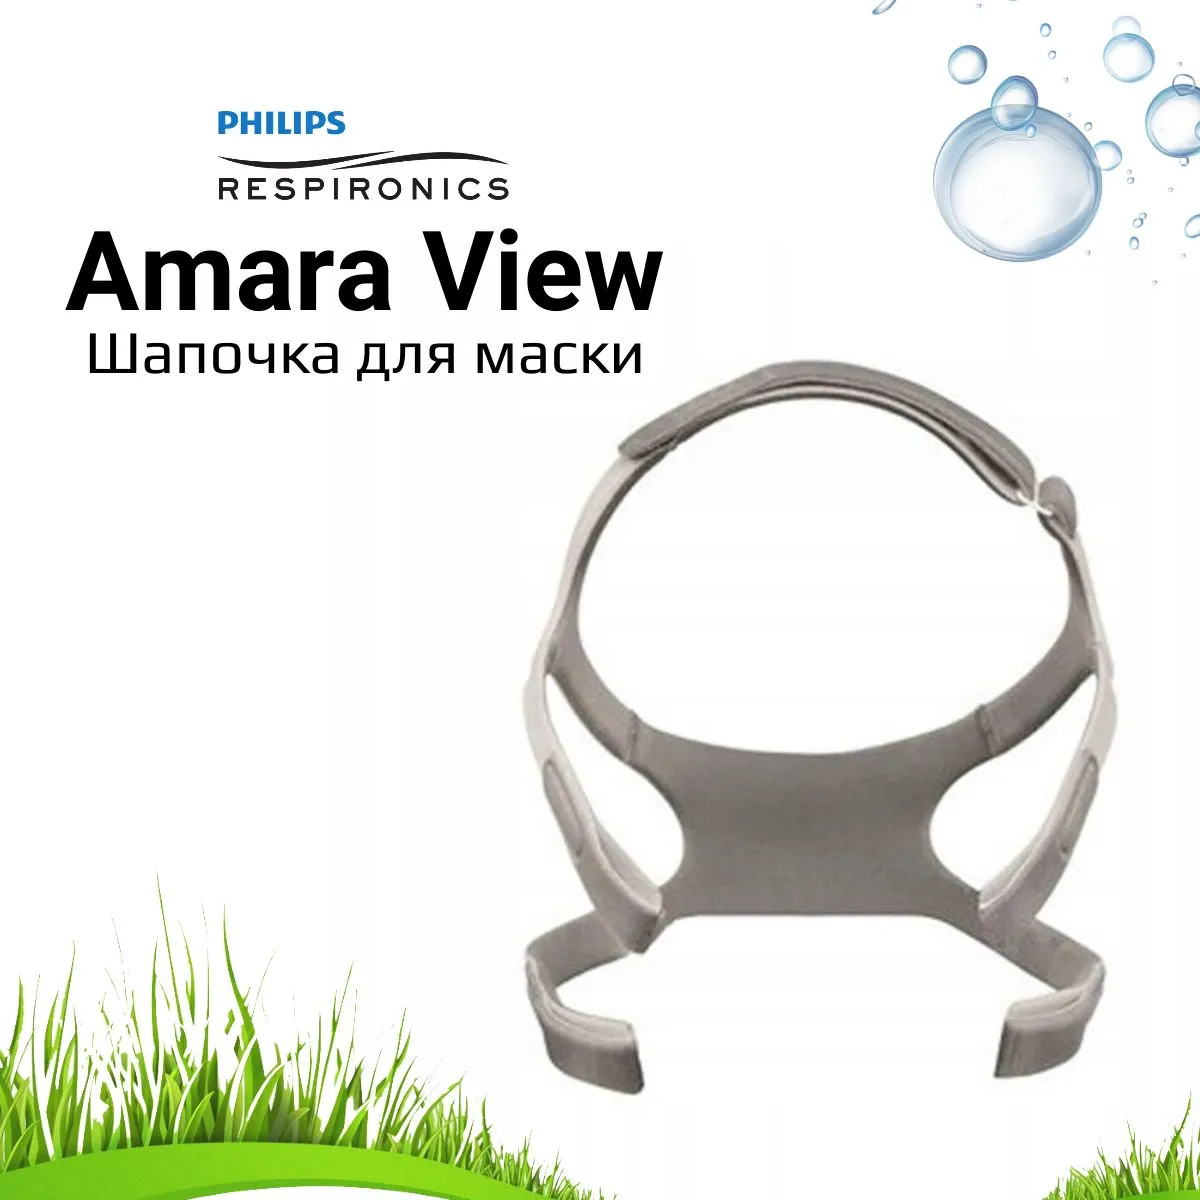 Philips Respironics Amara View Шапочка для маски standart